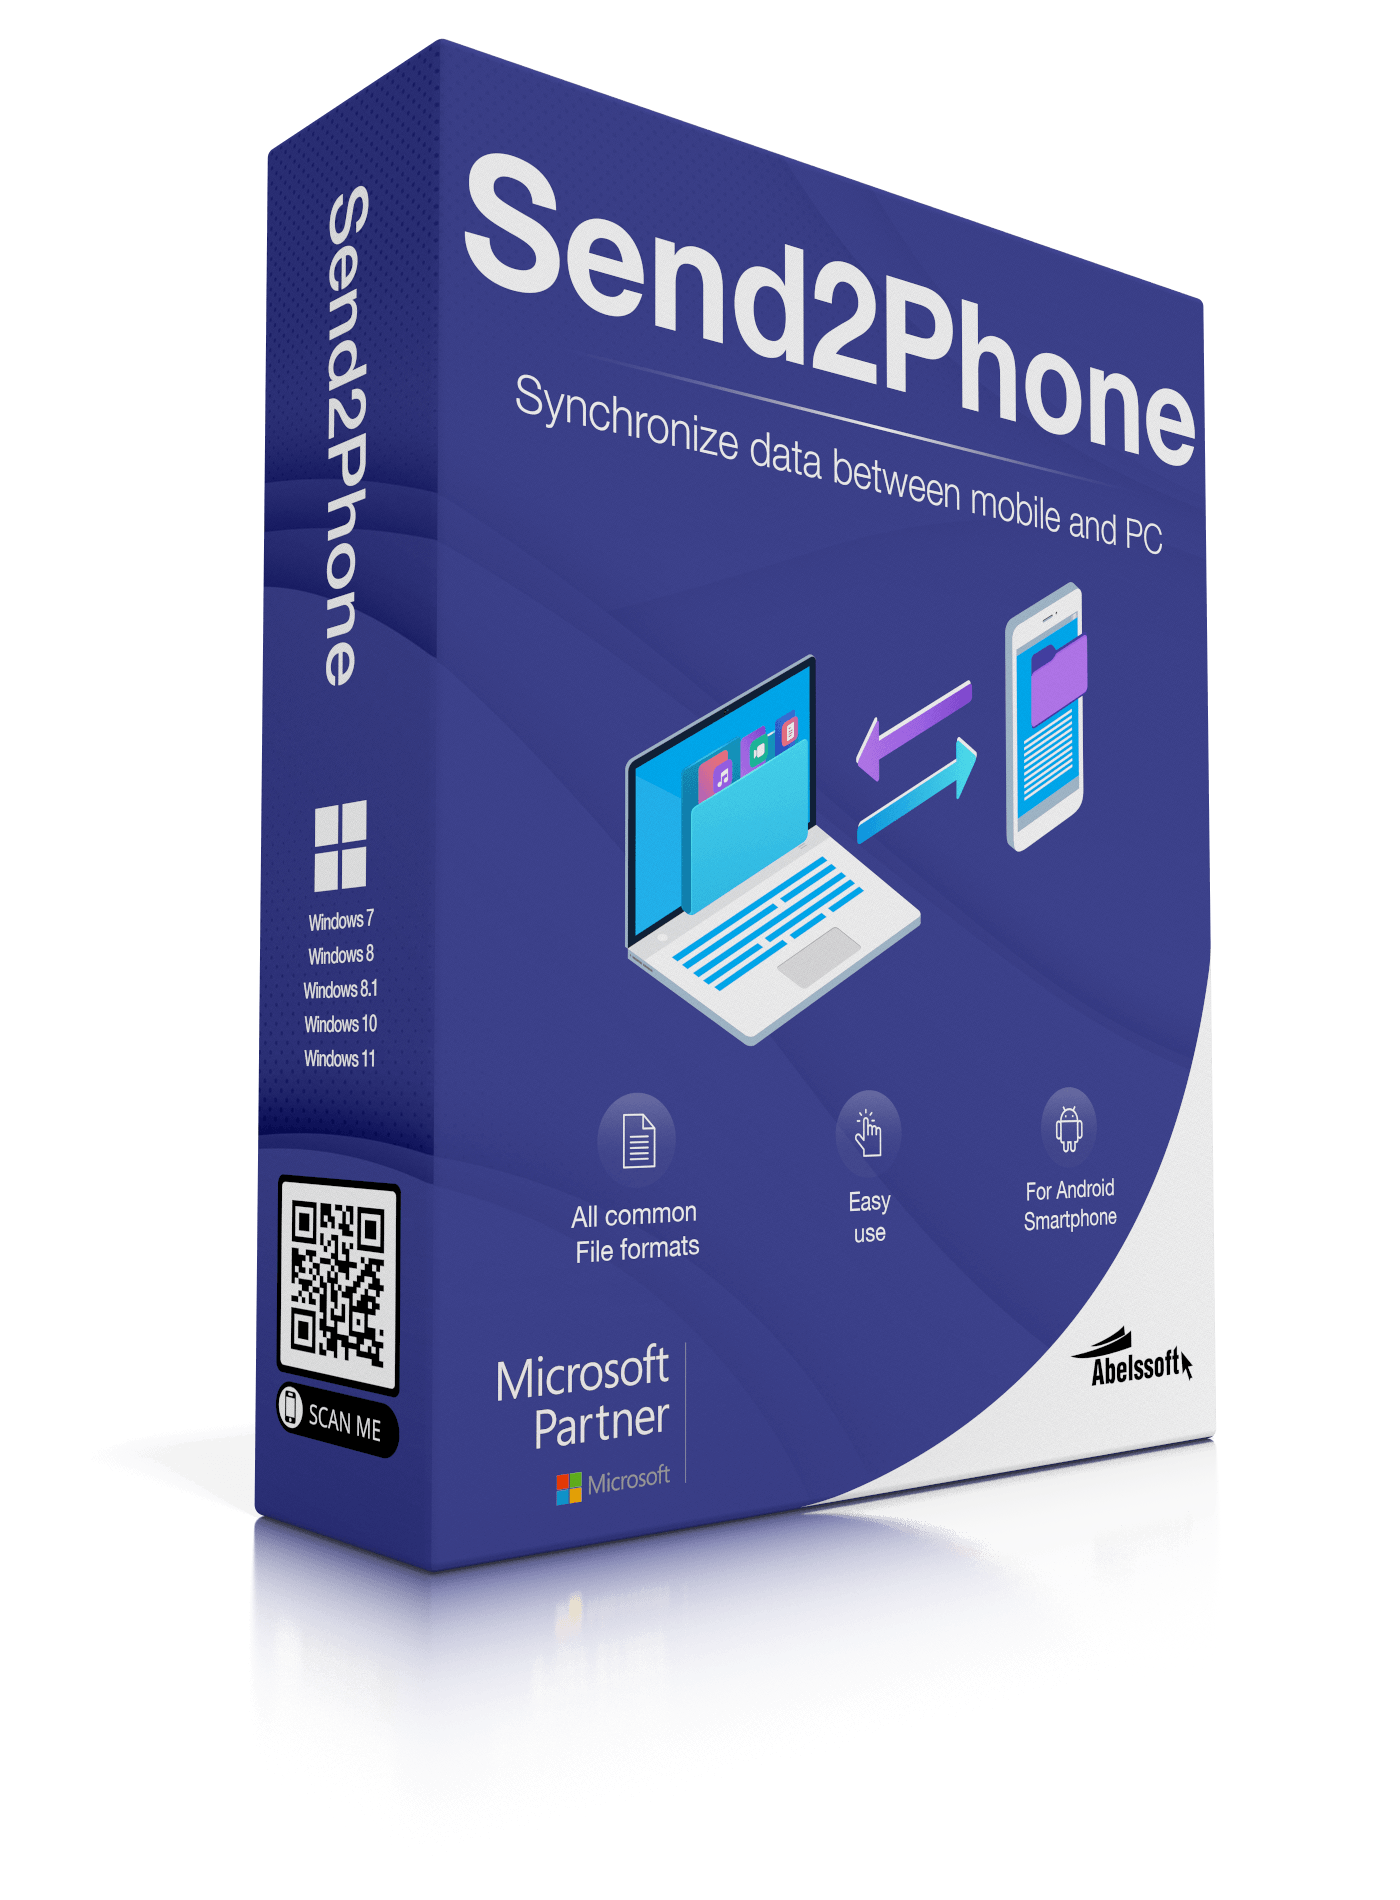 Send2Phone